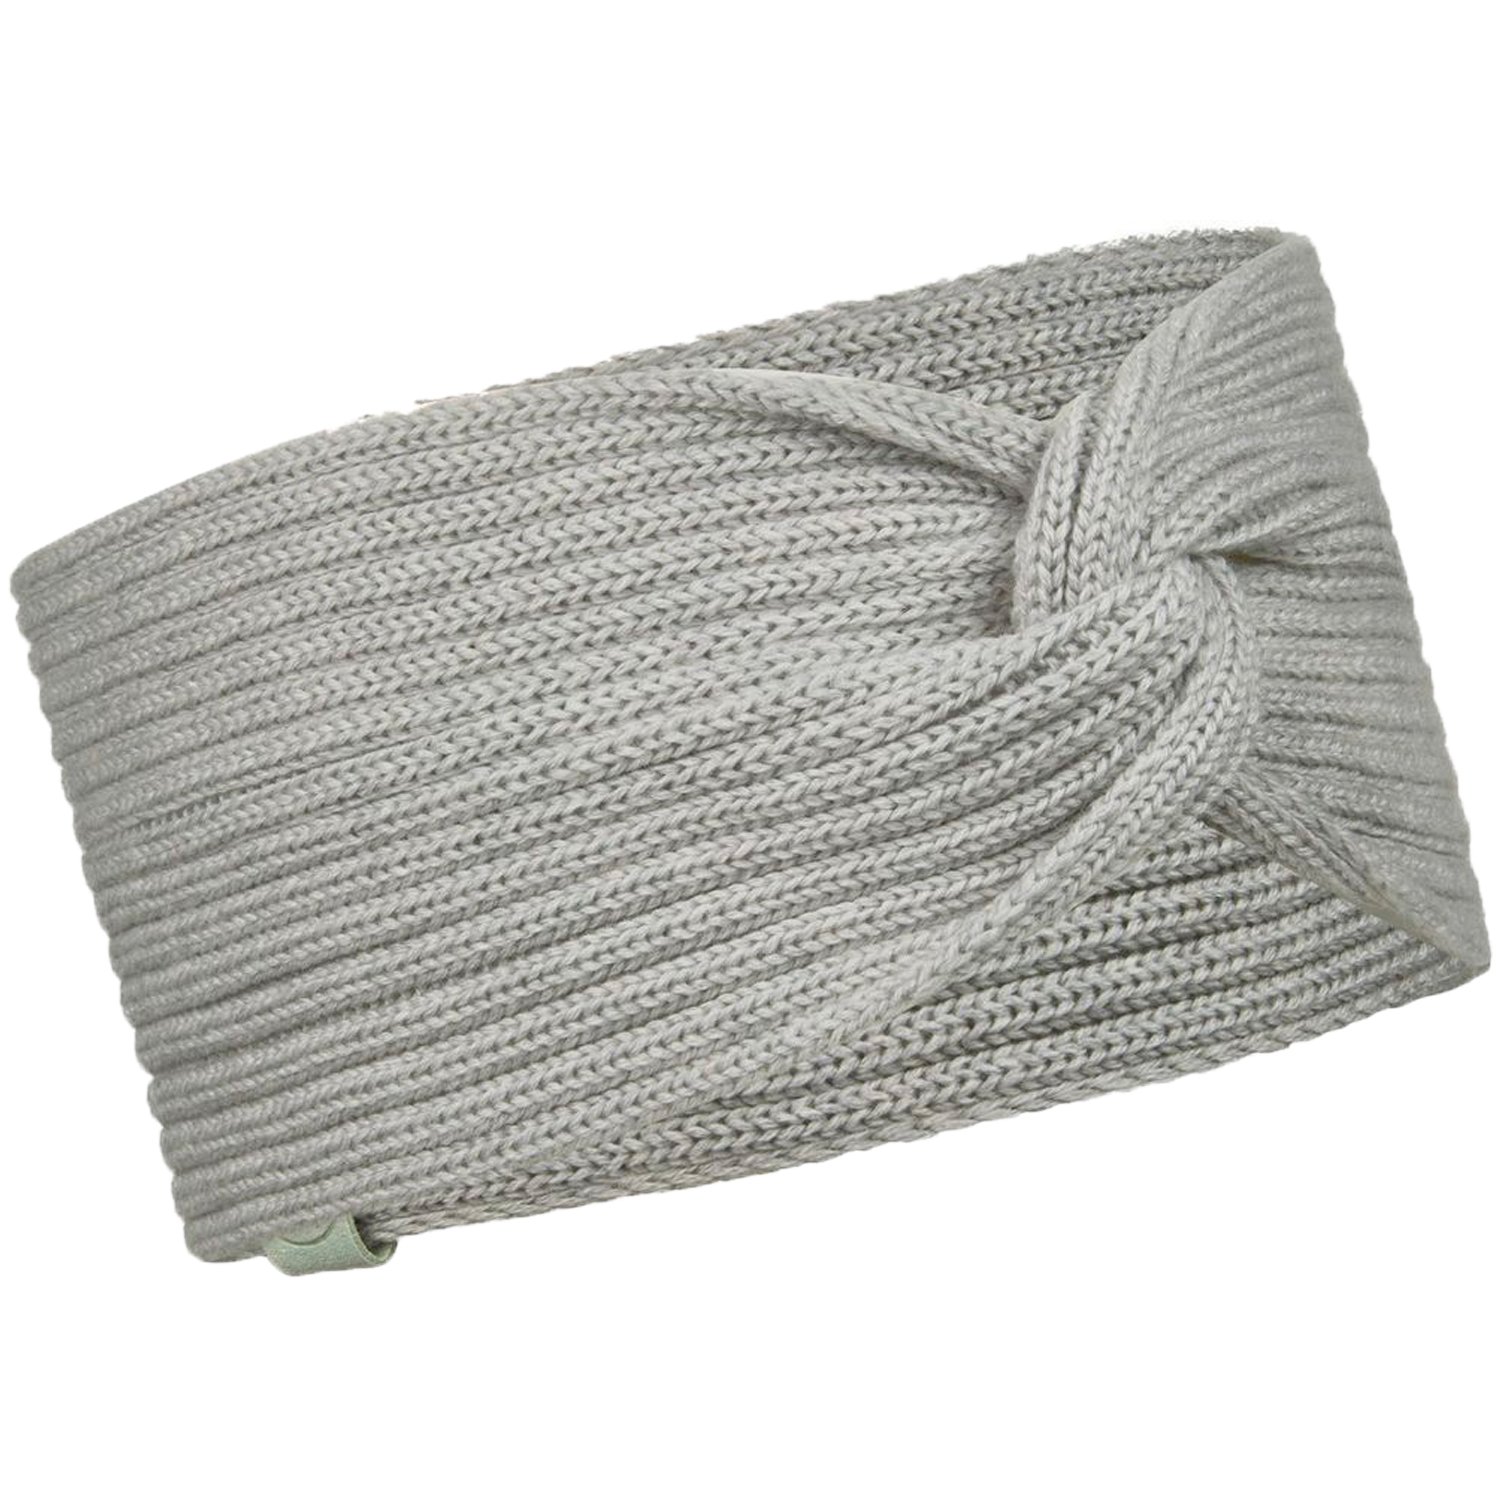 Повязка Buff Knitted Hat Norval Light Grey, женский, 126459.933.10.00 повязка buff knitted hat norval graphite серый 126459 901 10 00